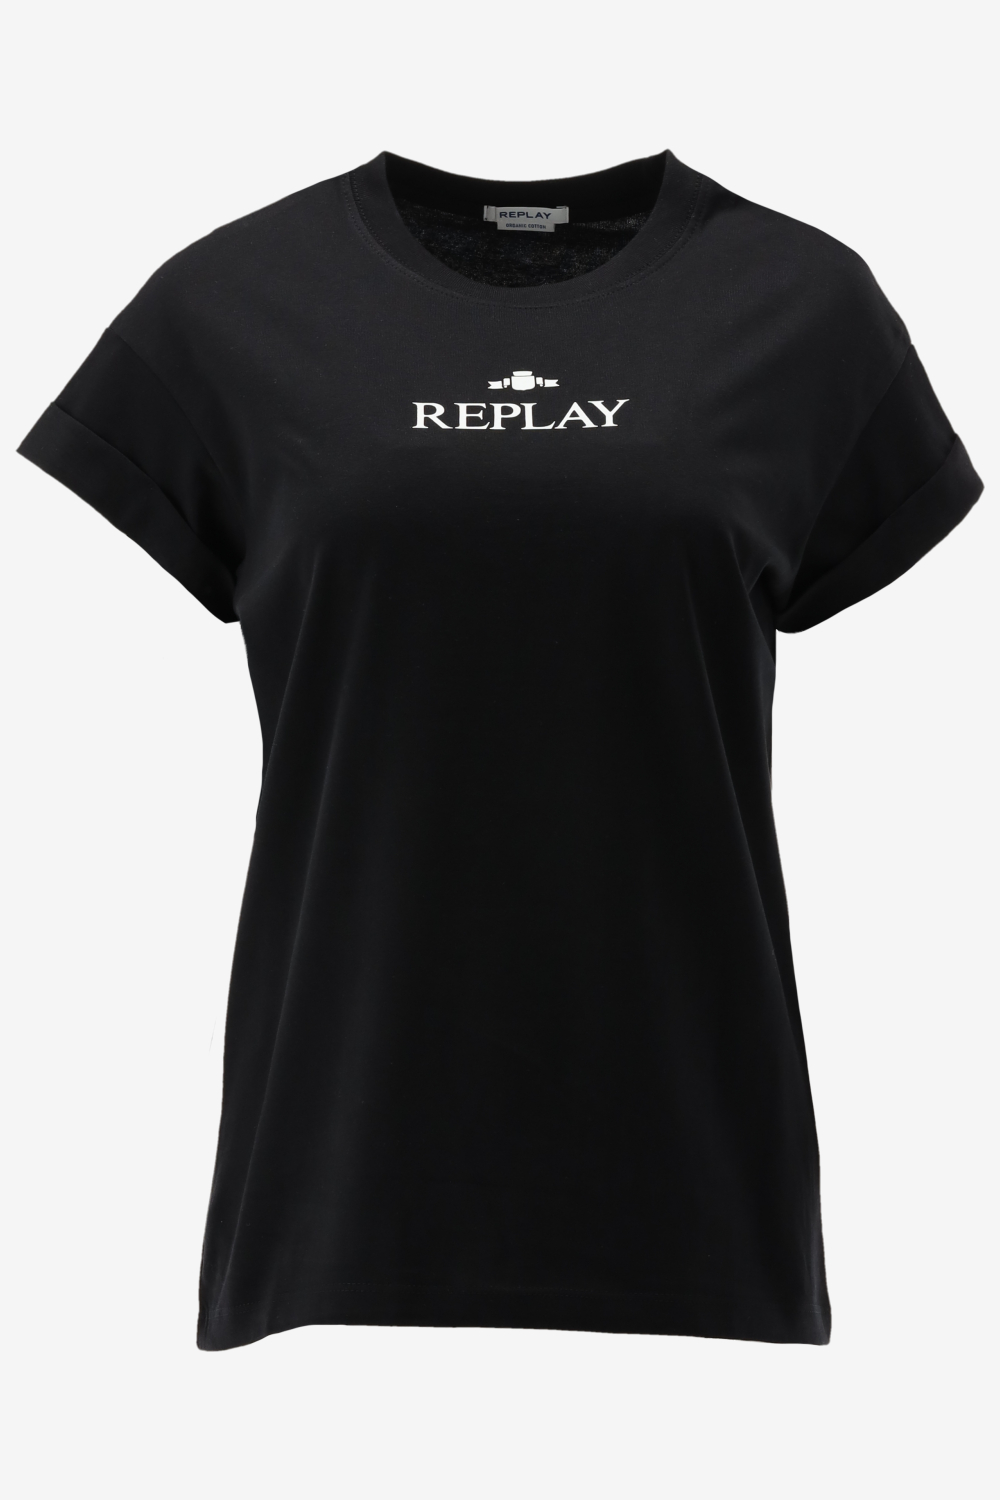 Replay t-shirt maat S